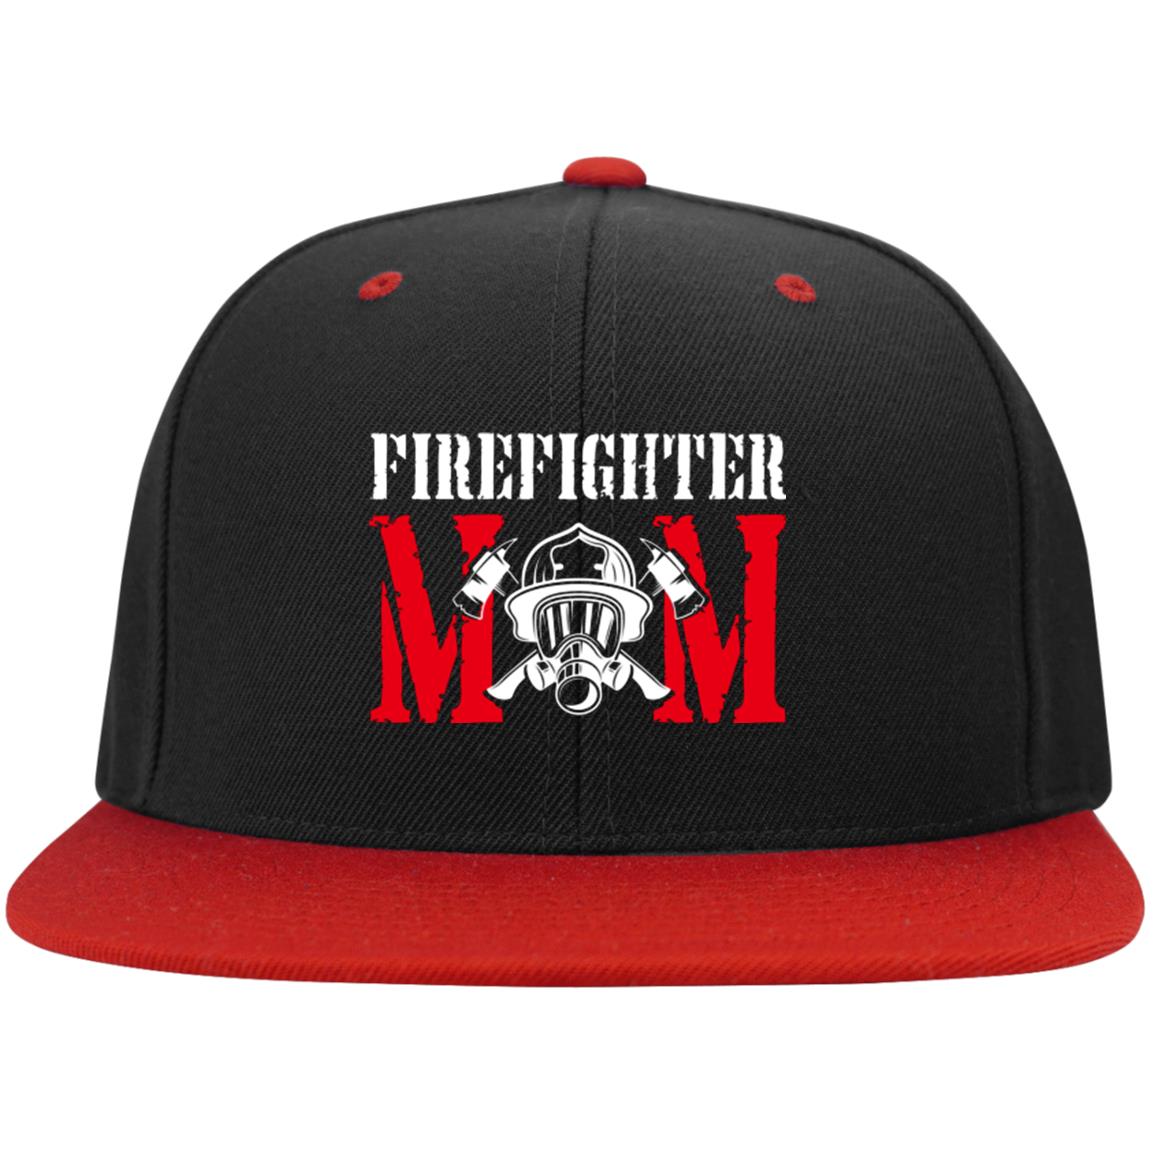 Firefighter Mom Snapback Hat